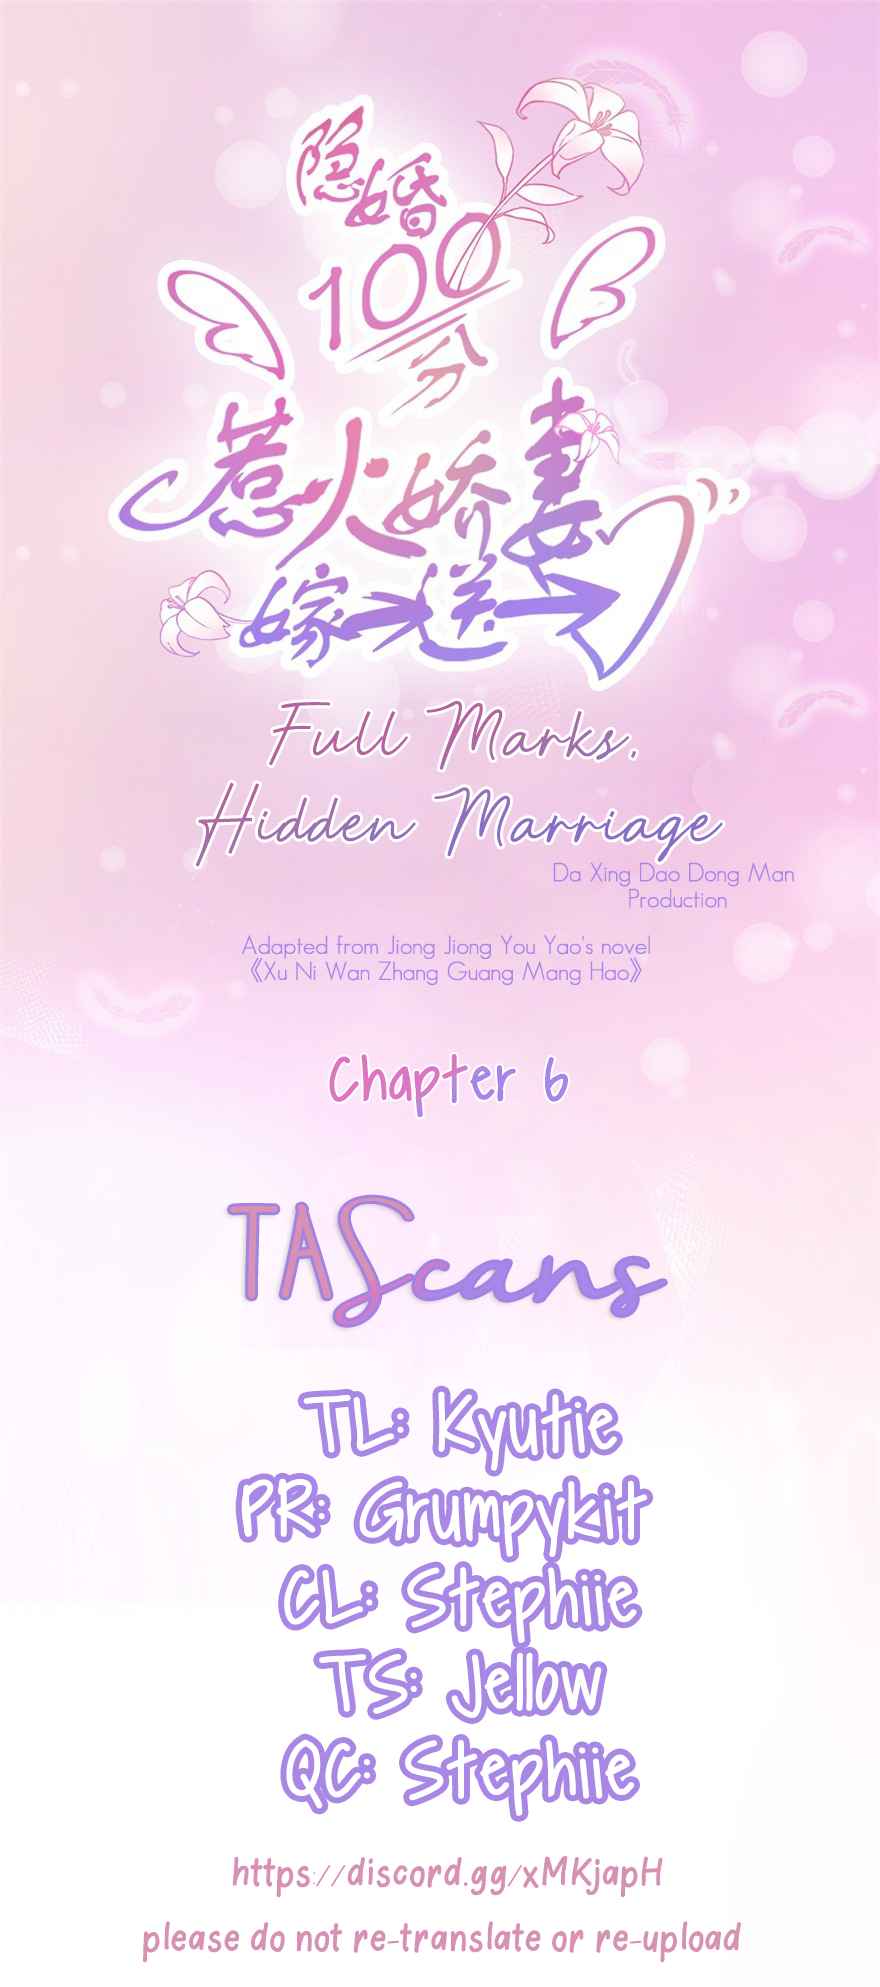 Full Marks, Hidden Marriage (大行道动漫) Ch. 6 Devote One's Life?